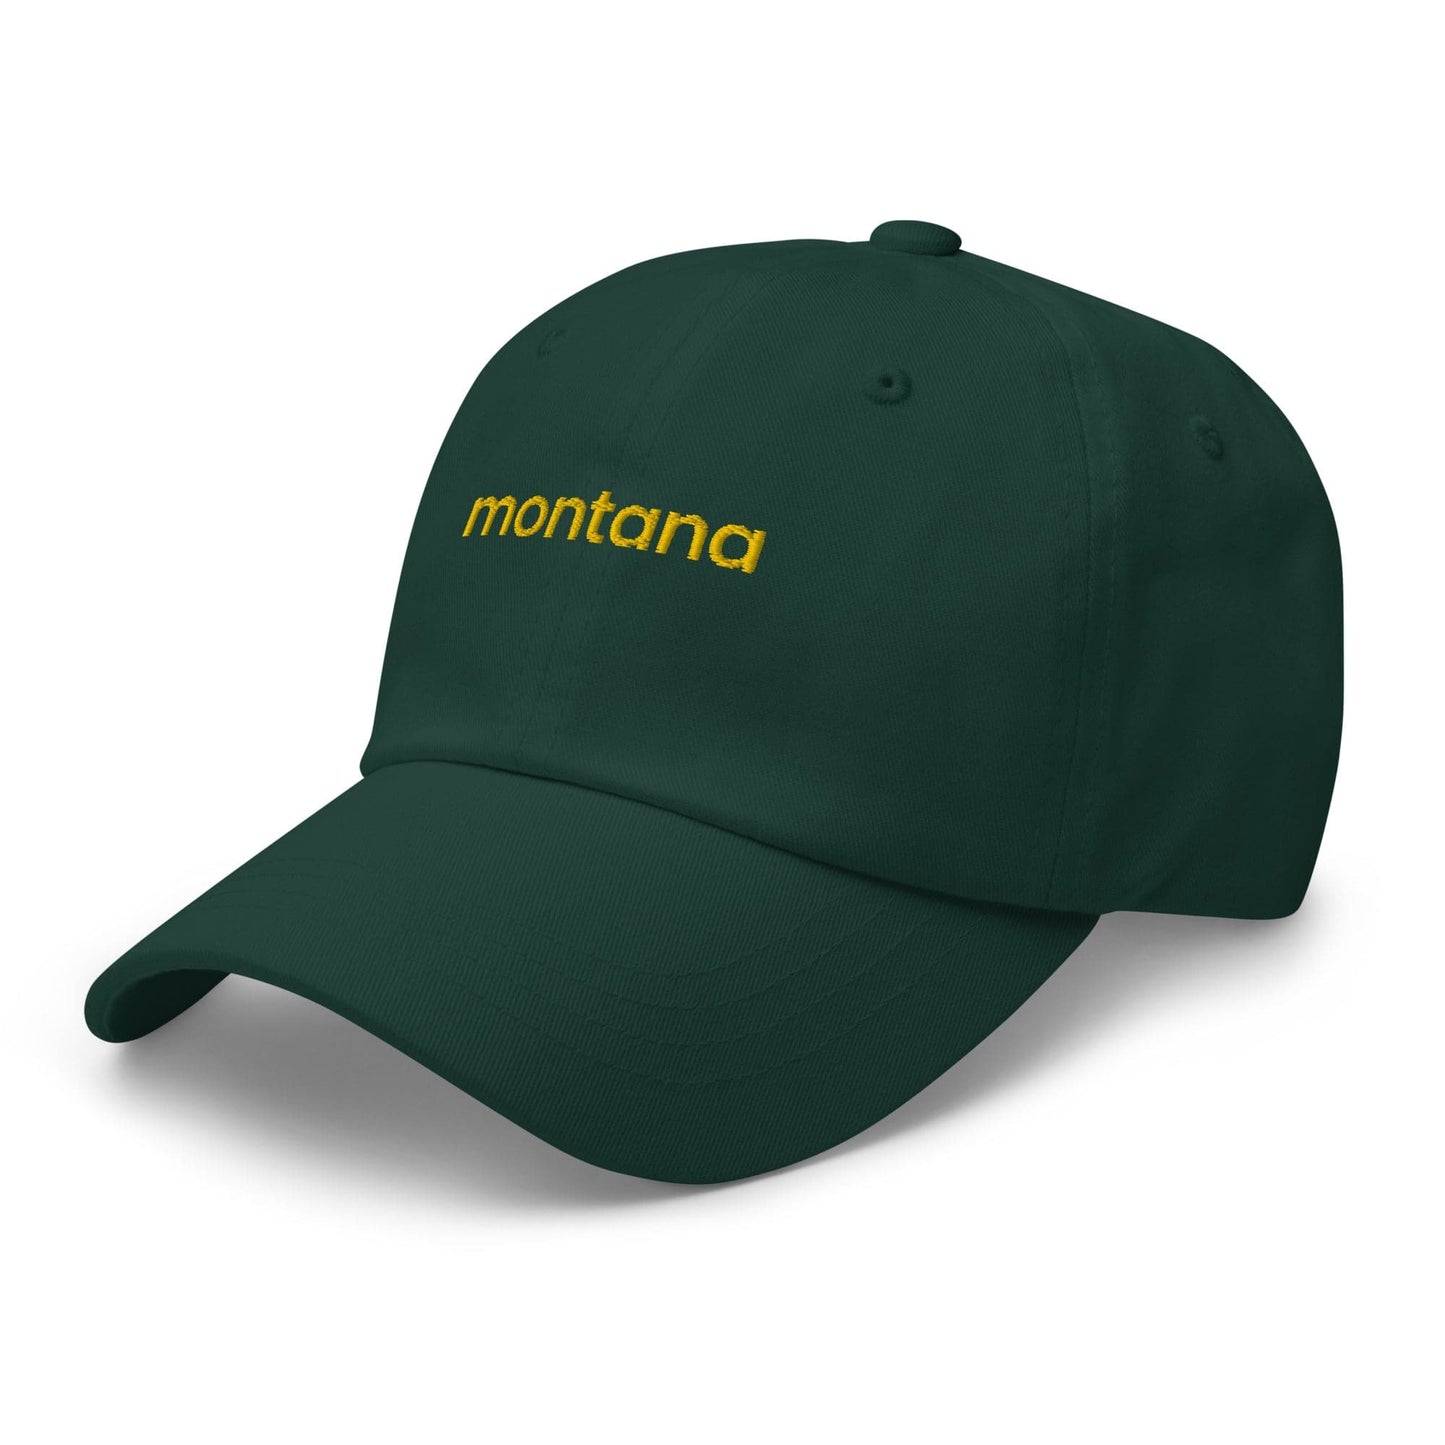 subtleflight Montana Dad hat Apparel & Accessories > Clothing Accessories > Hats